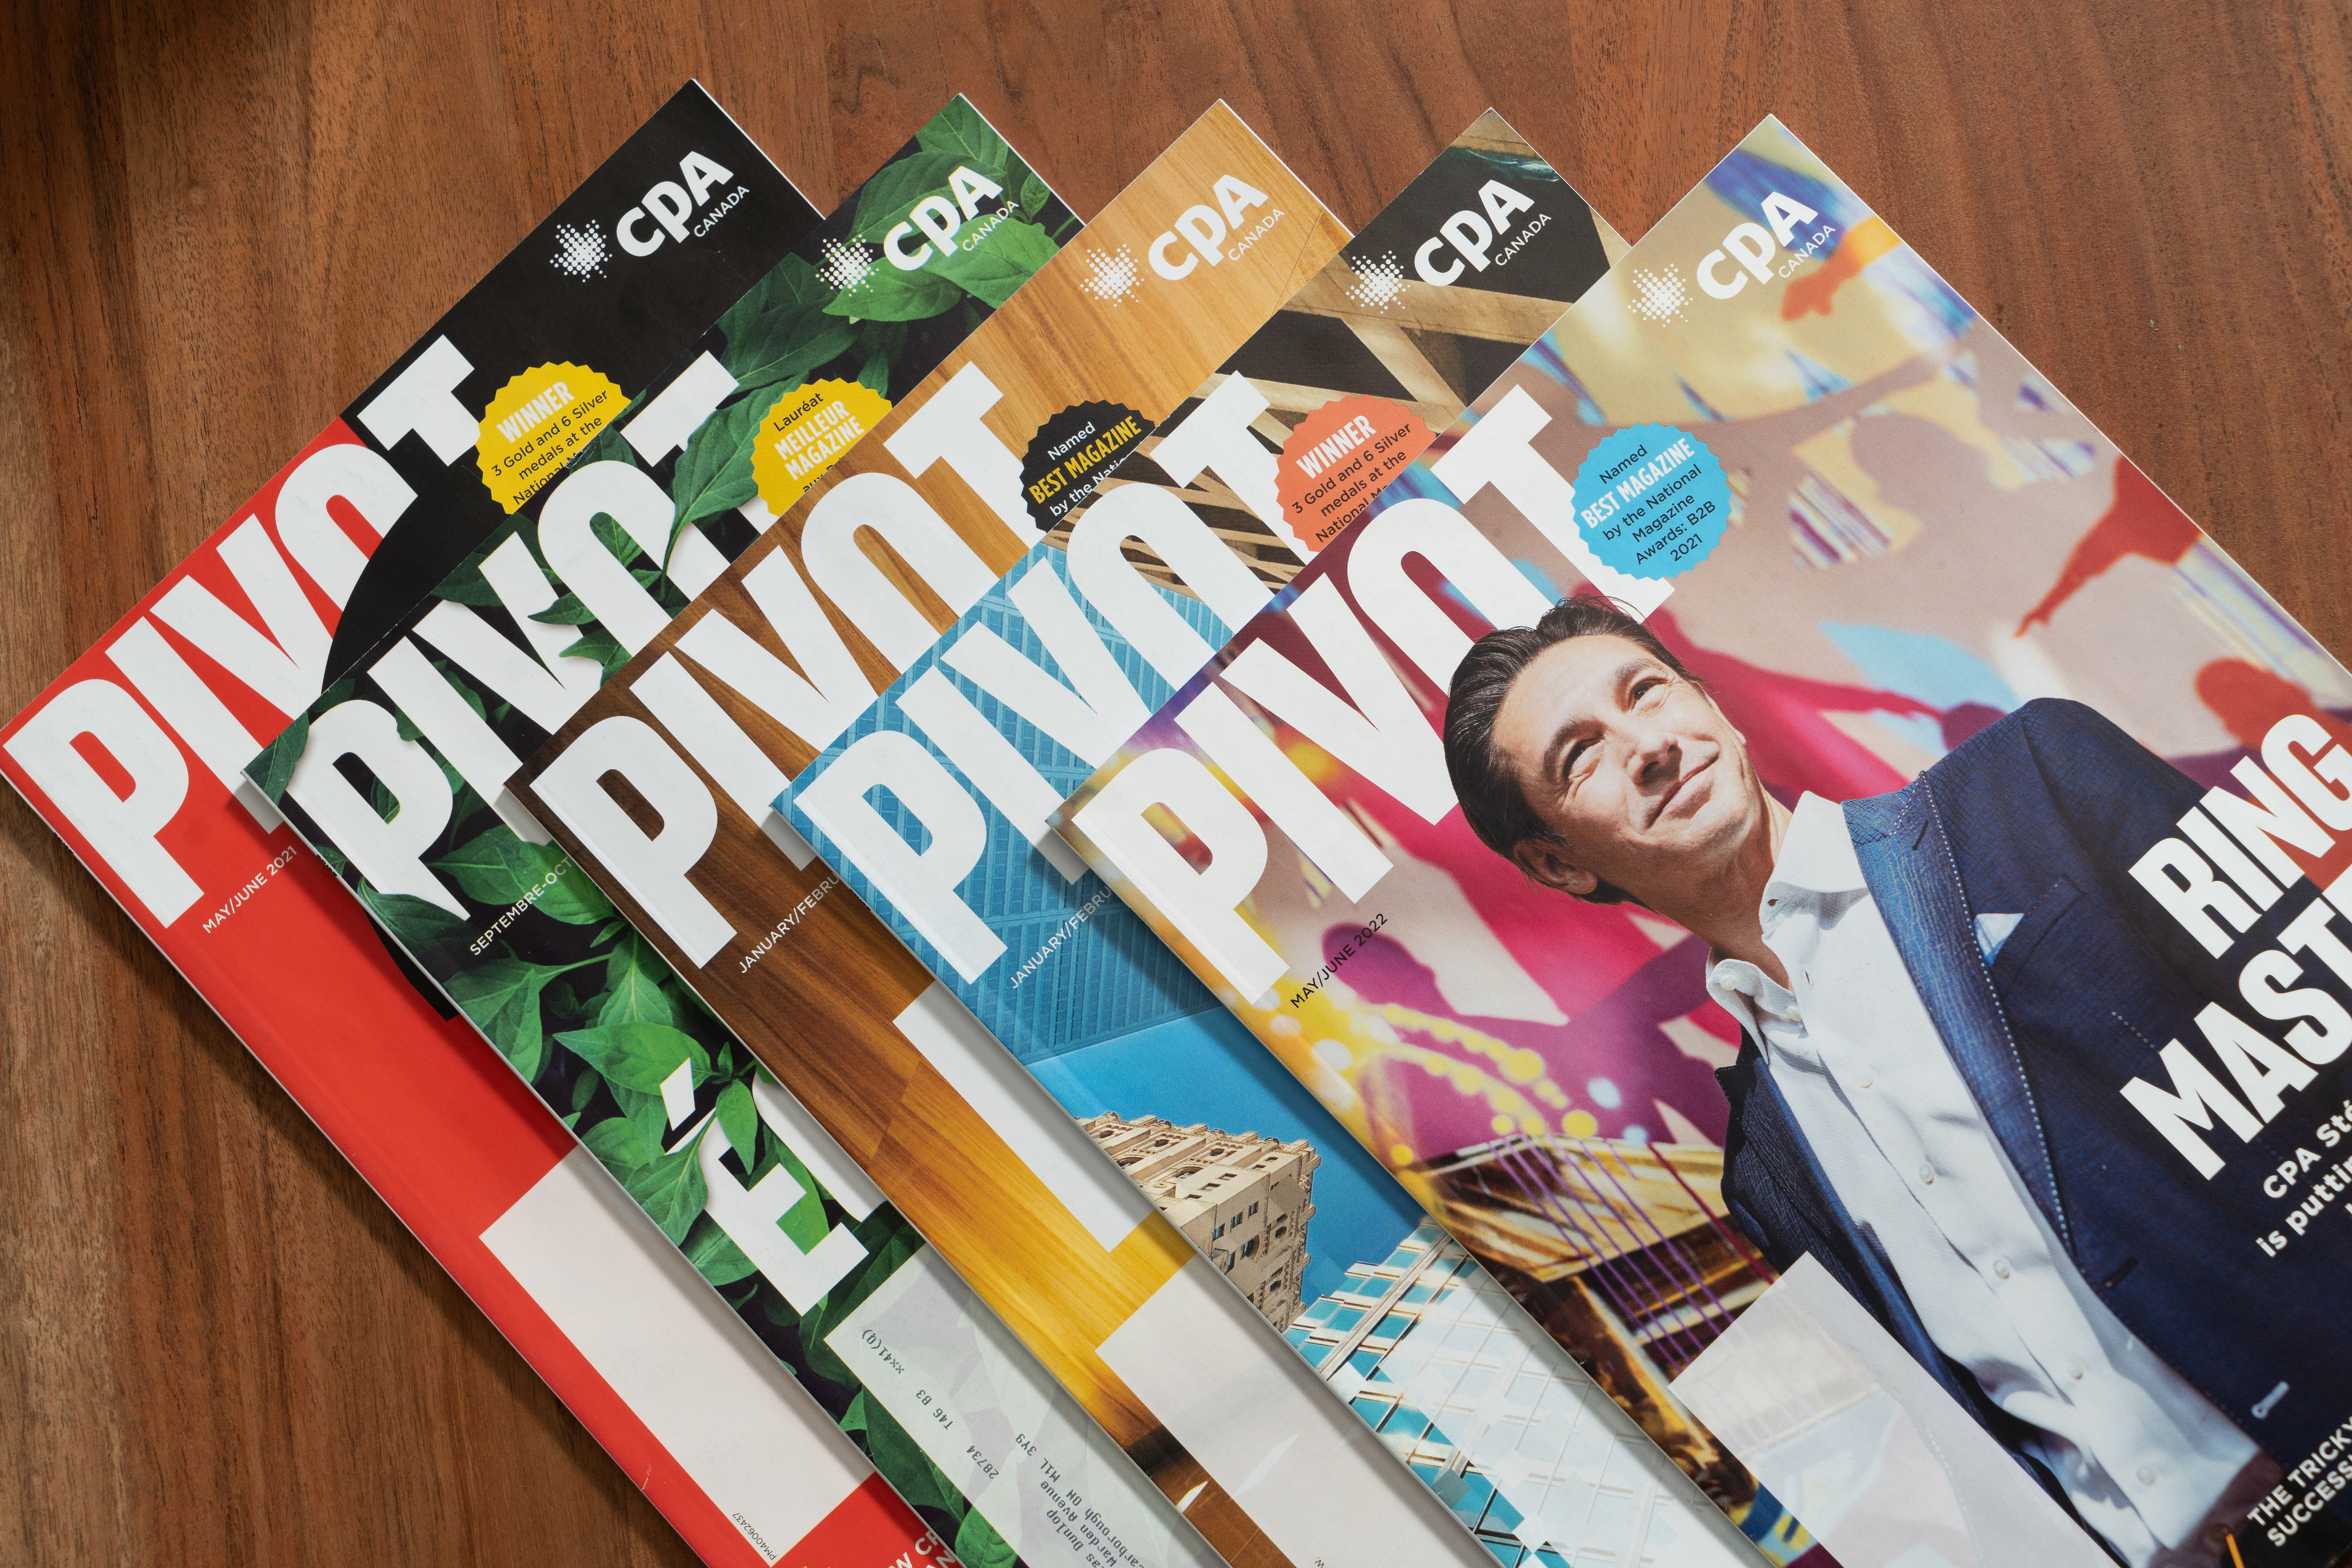 Collage of Pivot magazine covers.